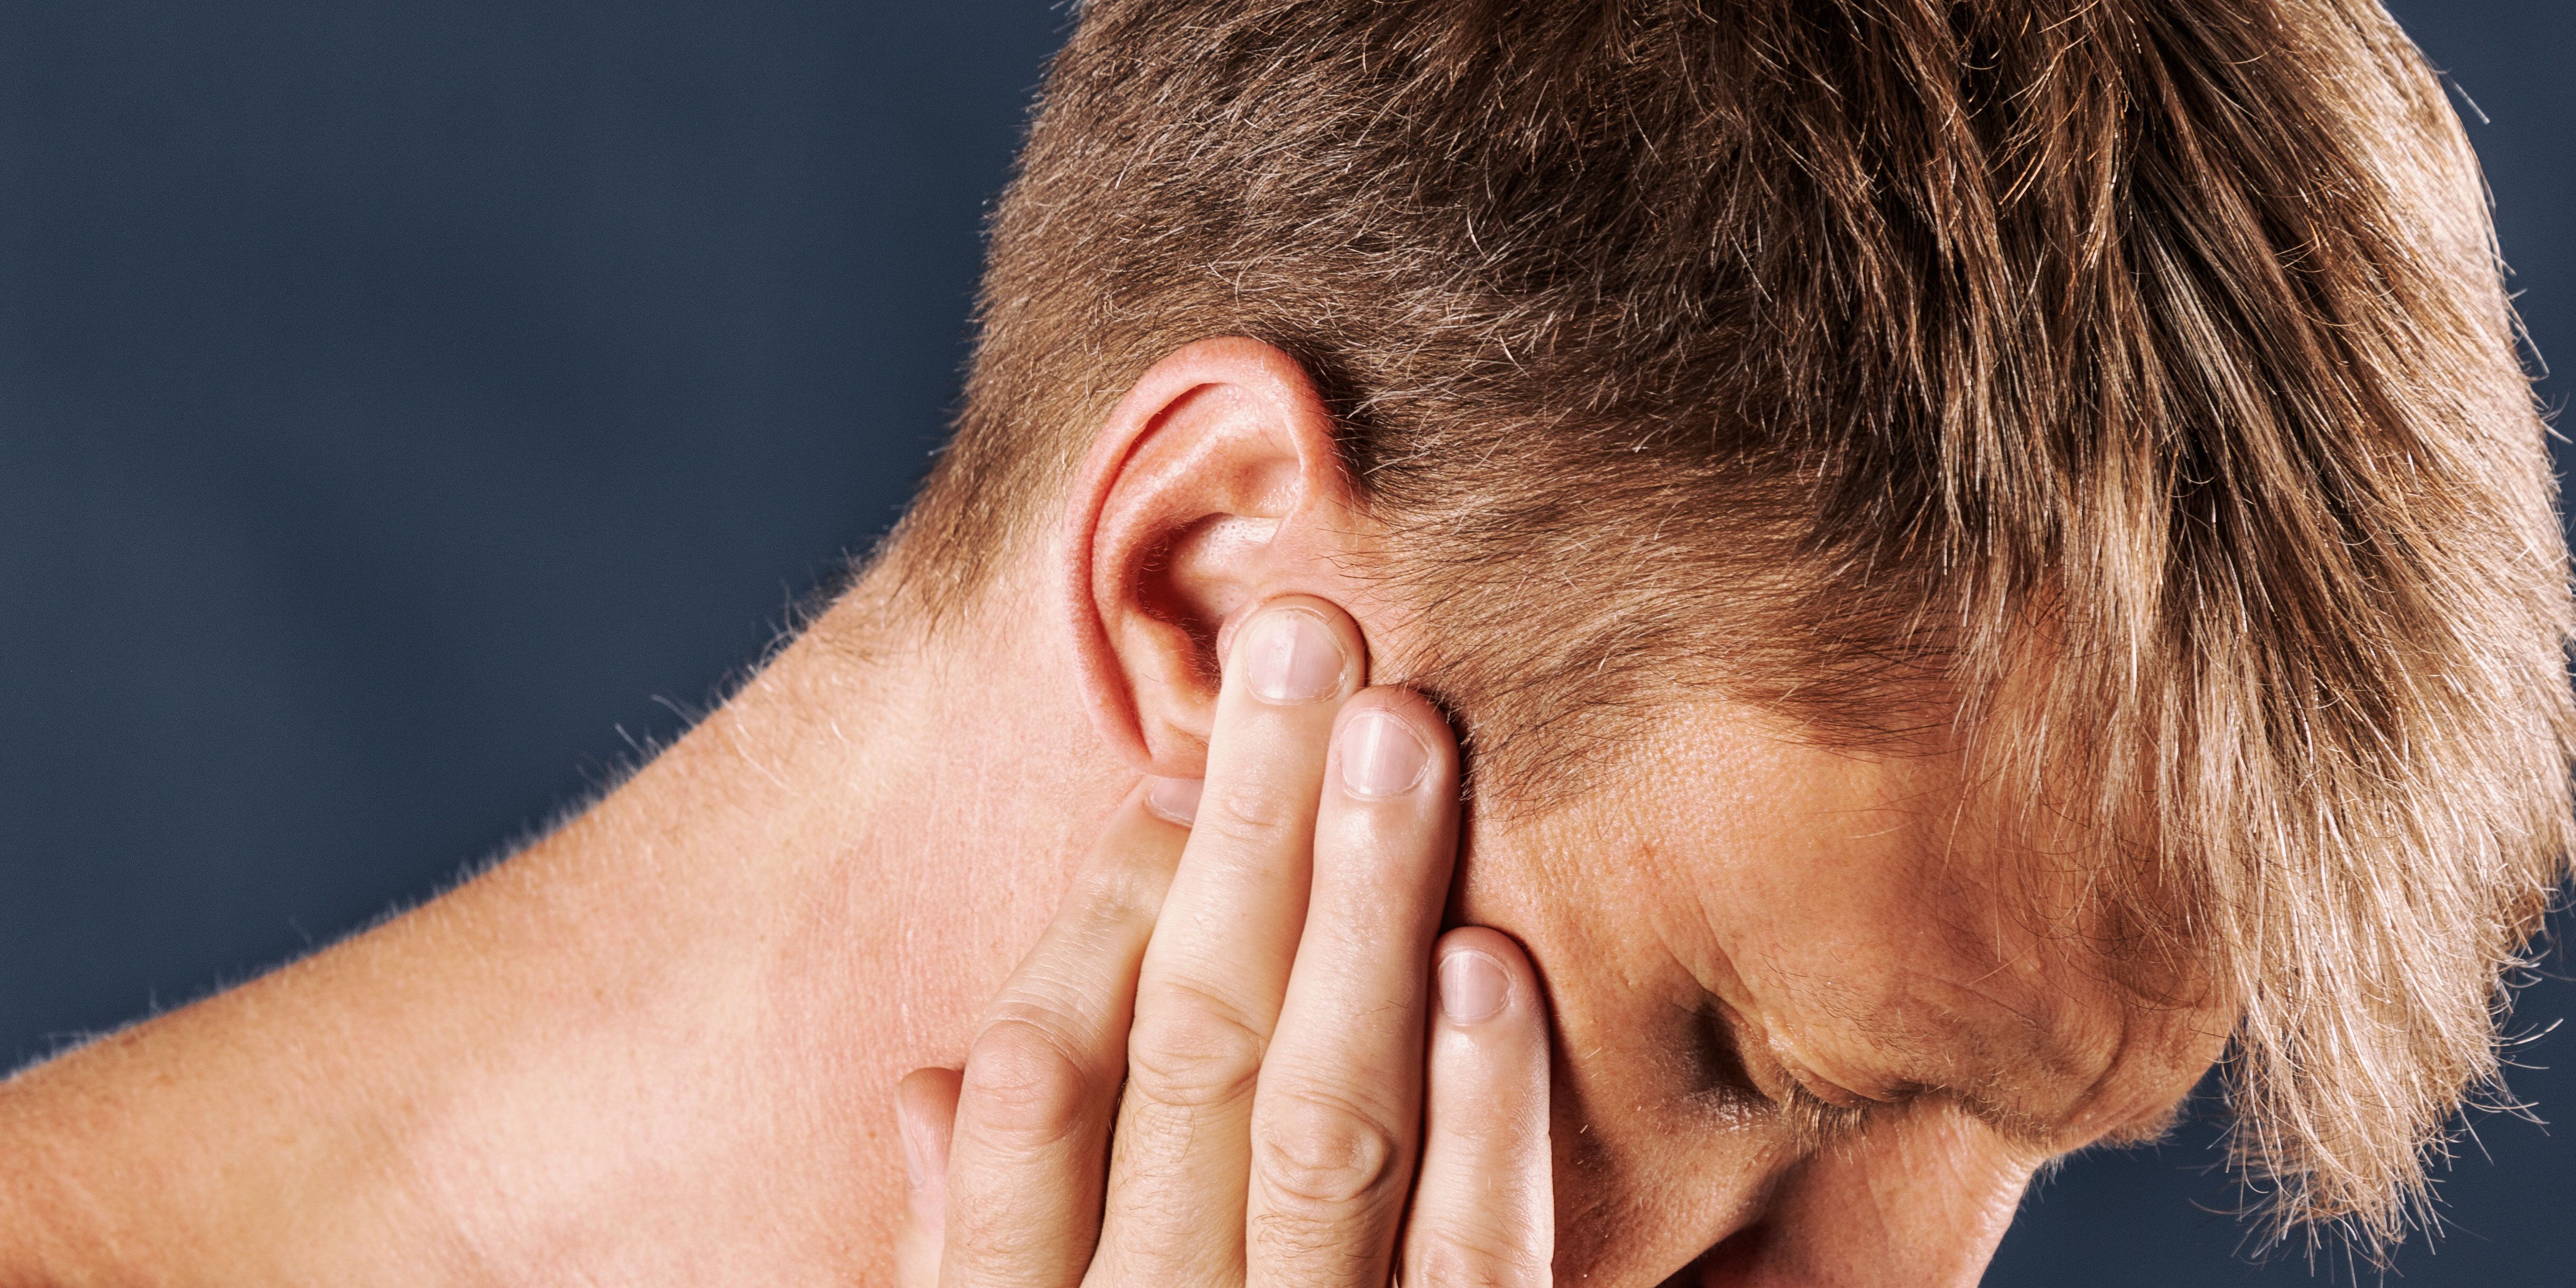 Transformator Vleien Vervelend Why Do My Ears Ring? - Causes, Treatments